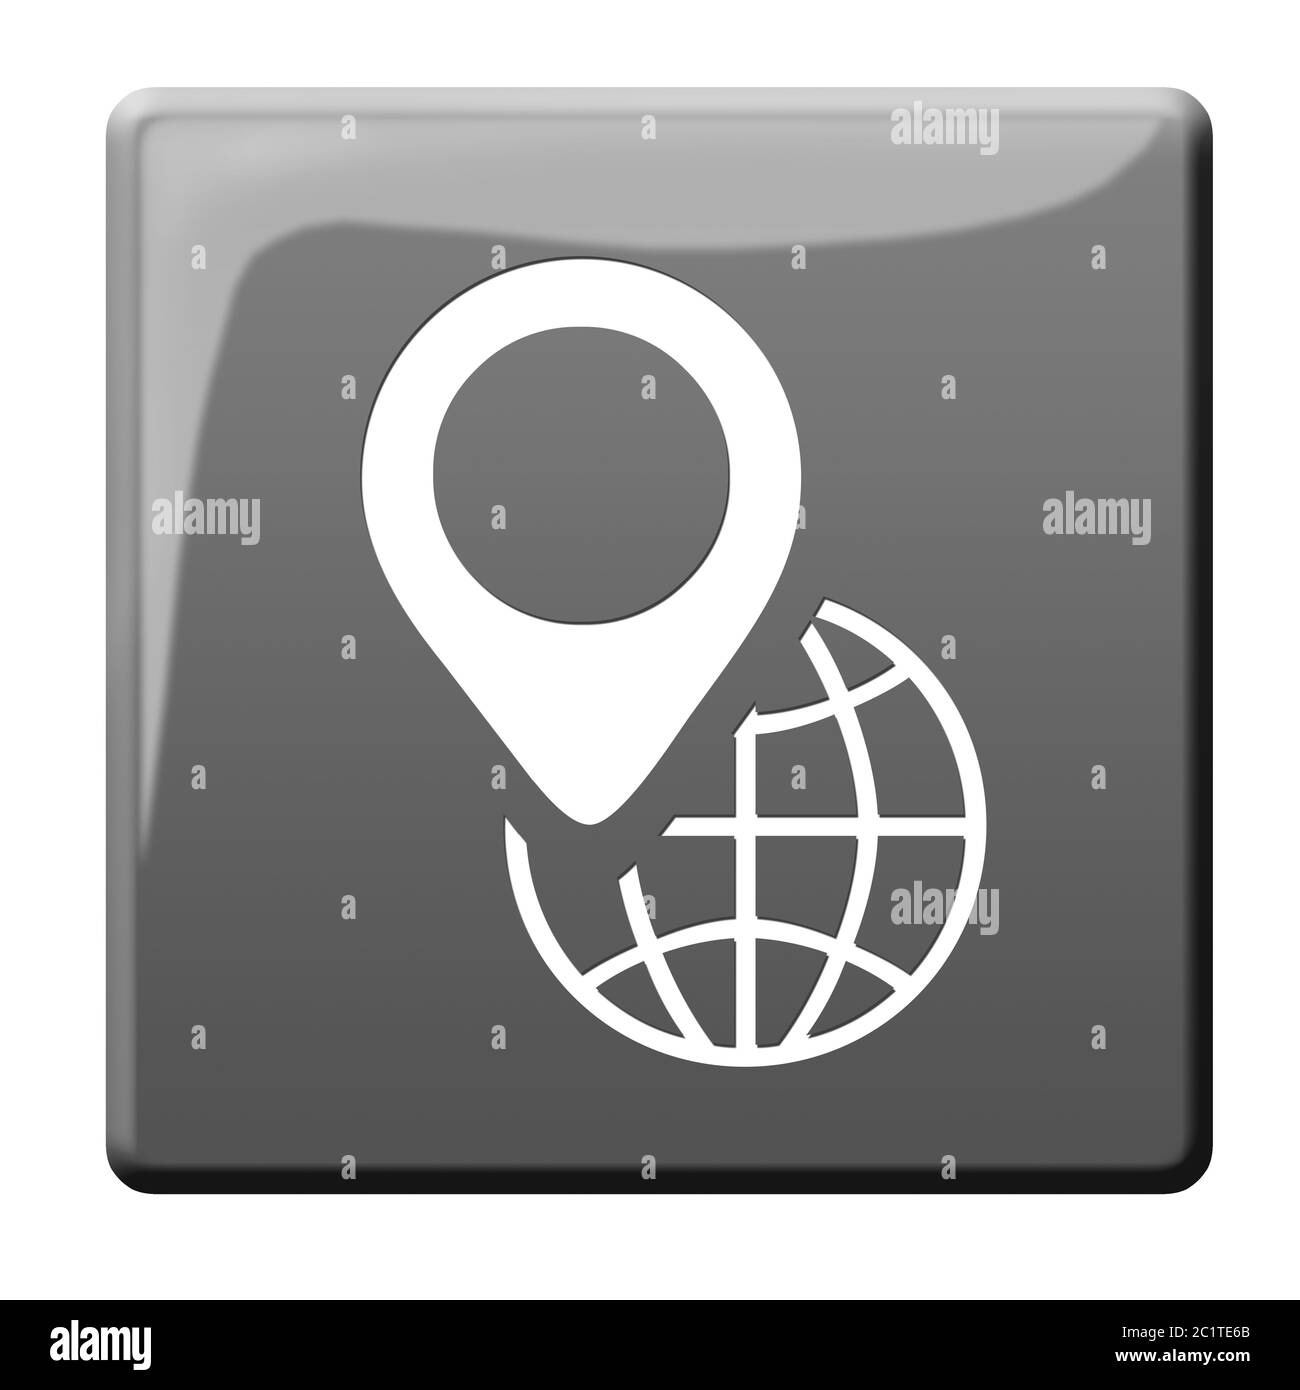 navigation - symbol button Stock Photo